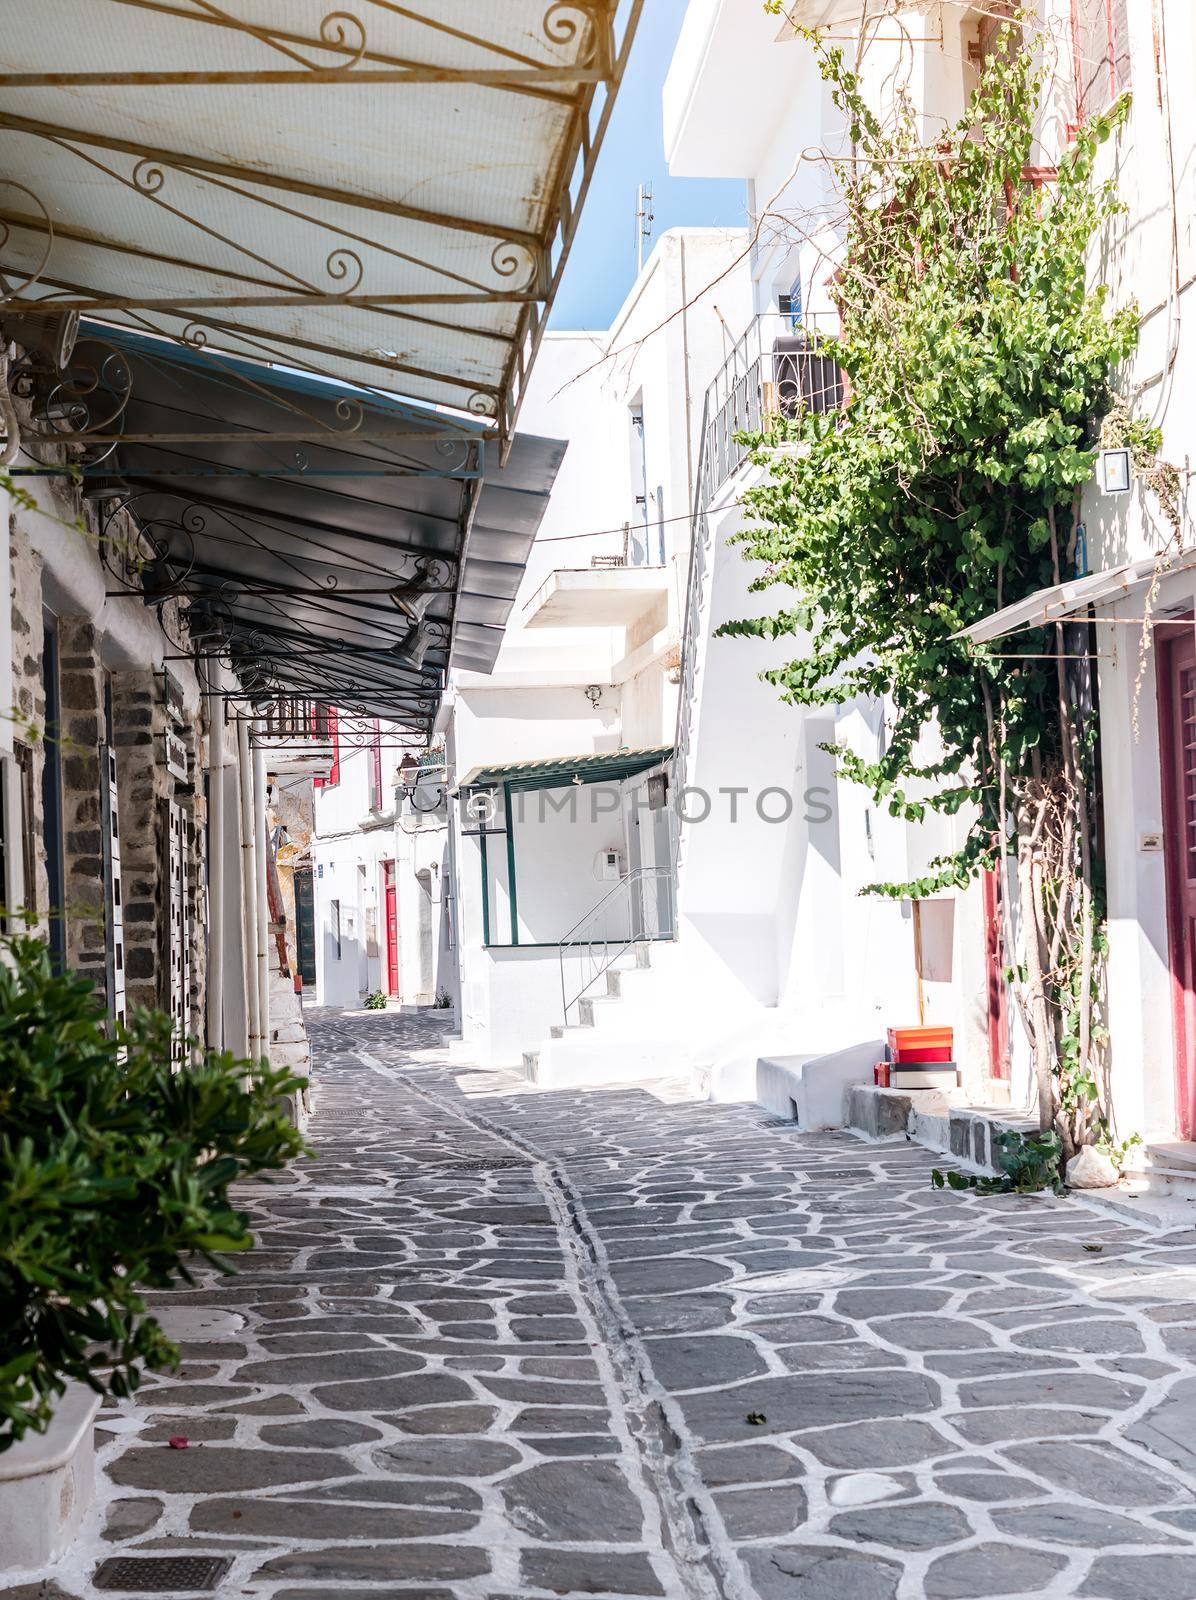 Narrow street with white houses, Greece by tan4ikk1